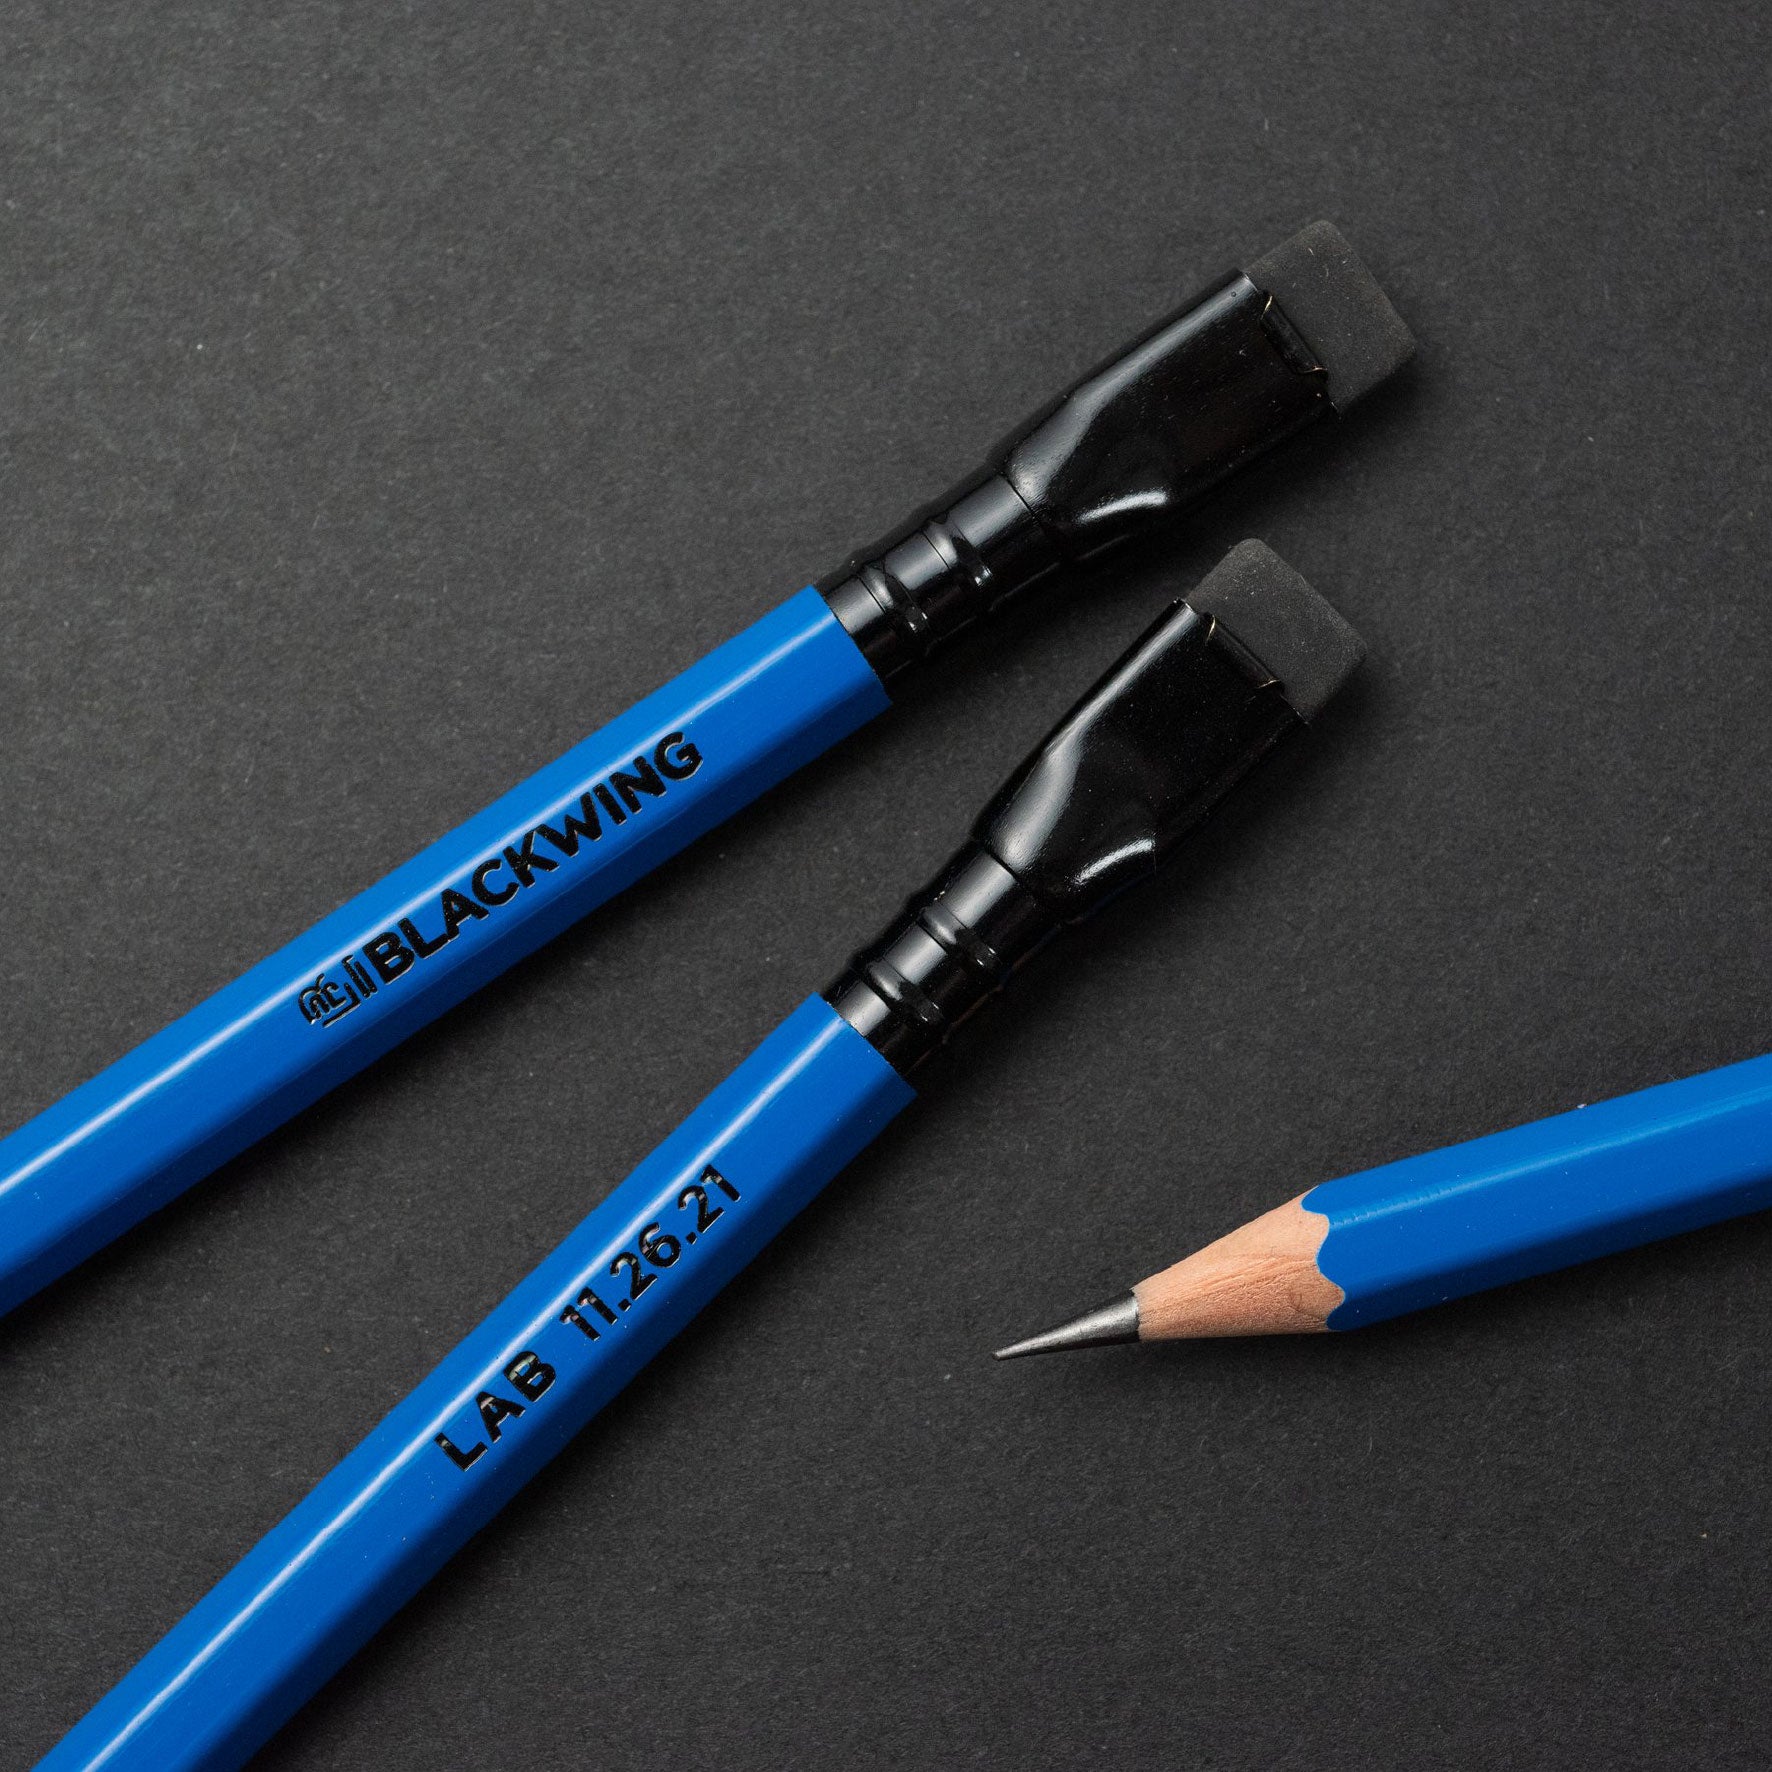 Palomino Blackwing - Pencil - Lab 11.26.21 - Box of 12 (Limited Edition)